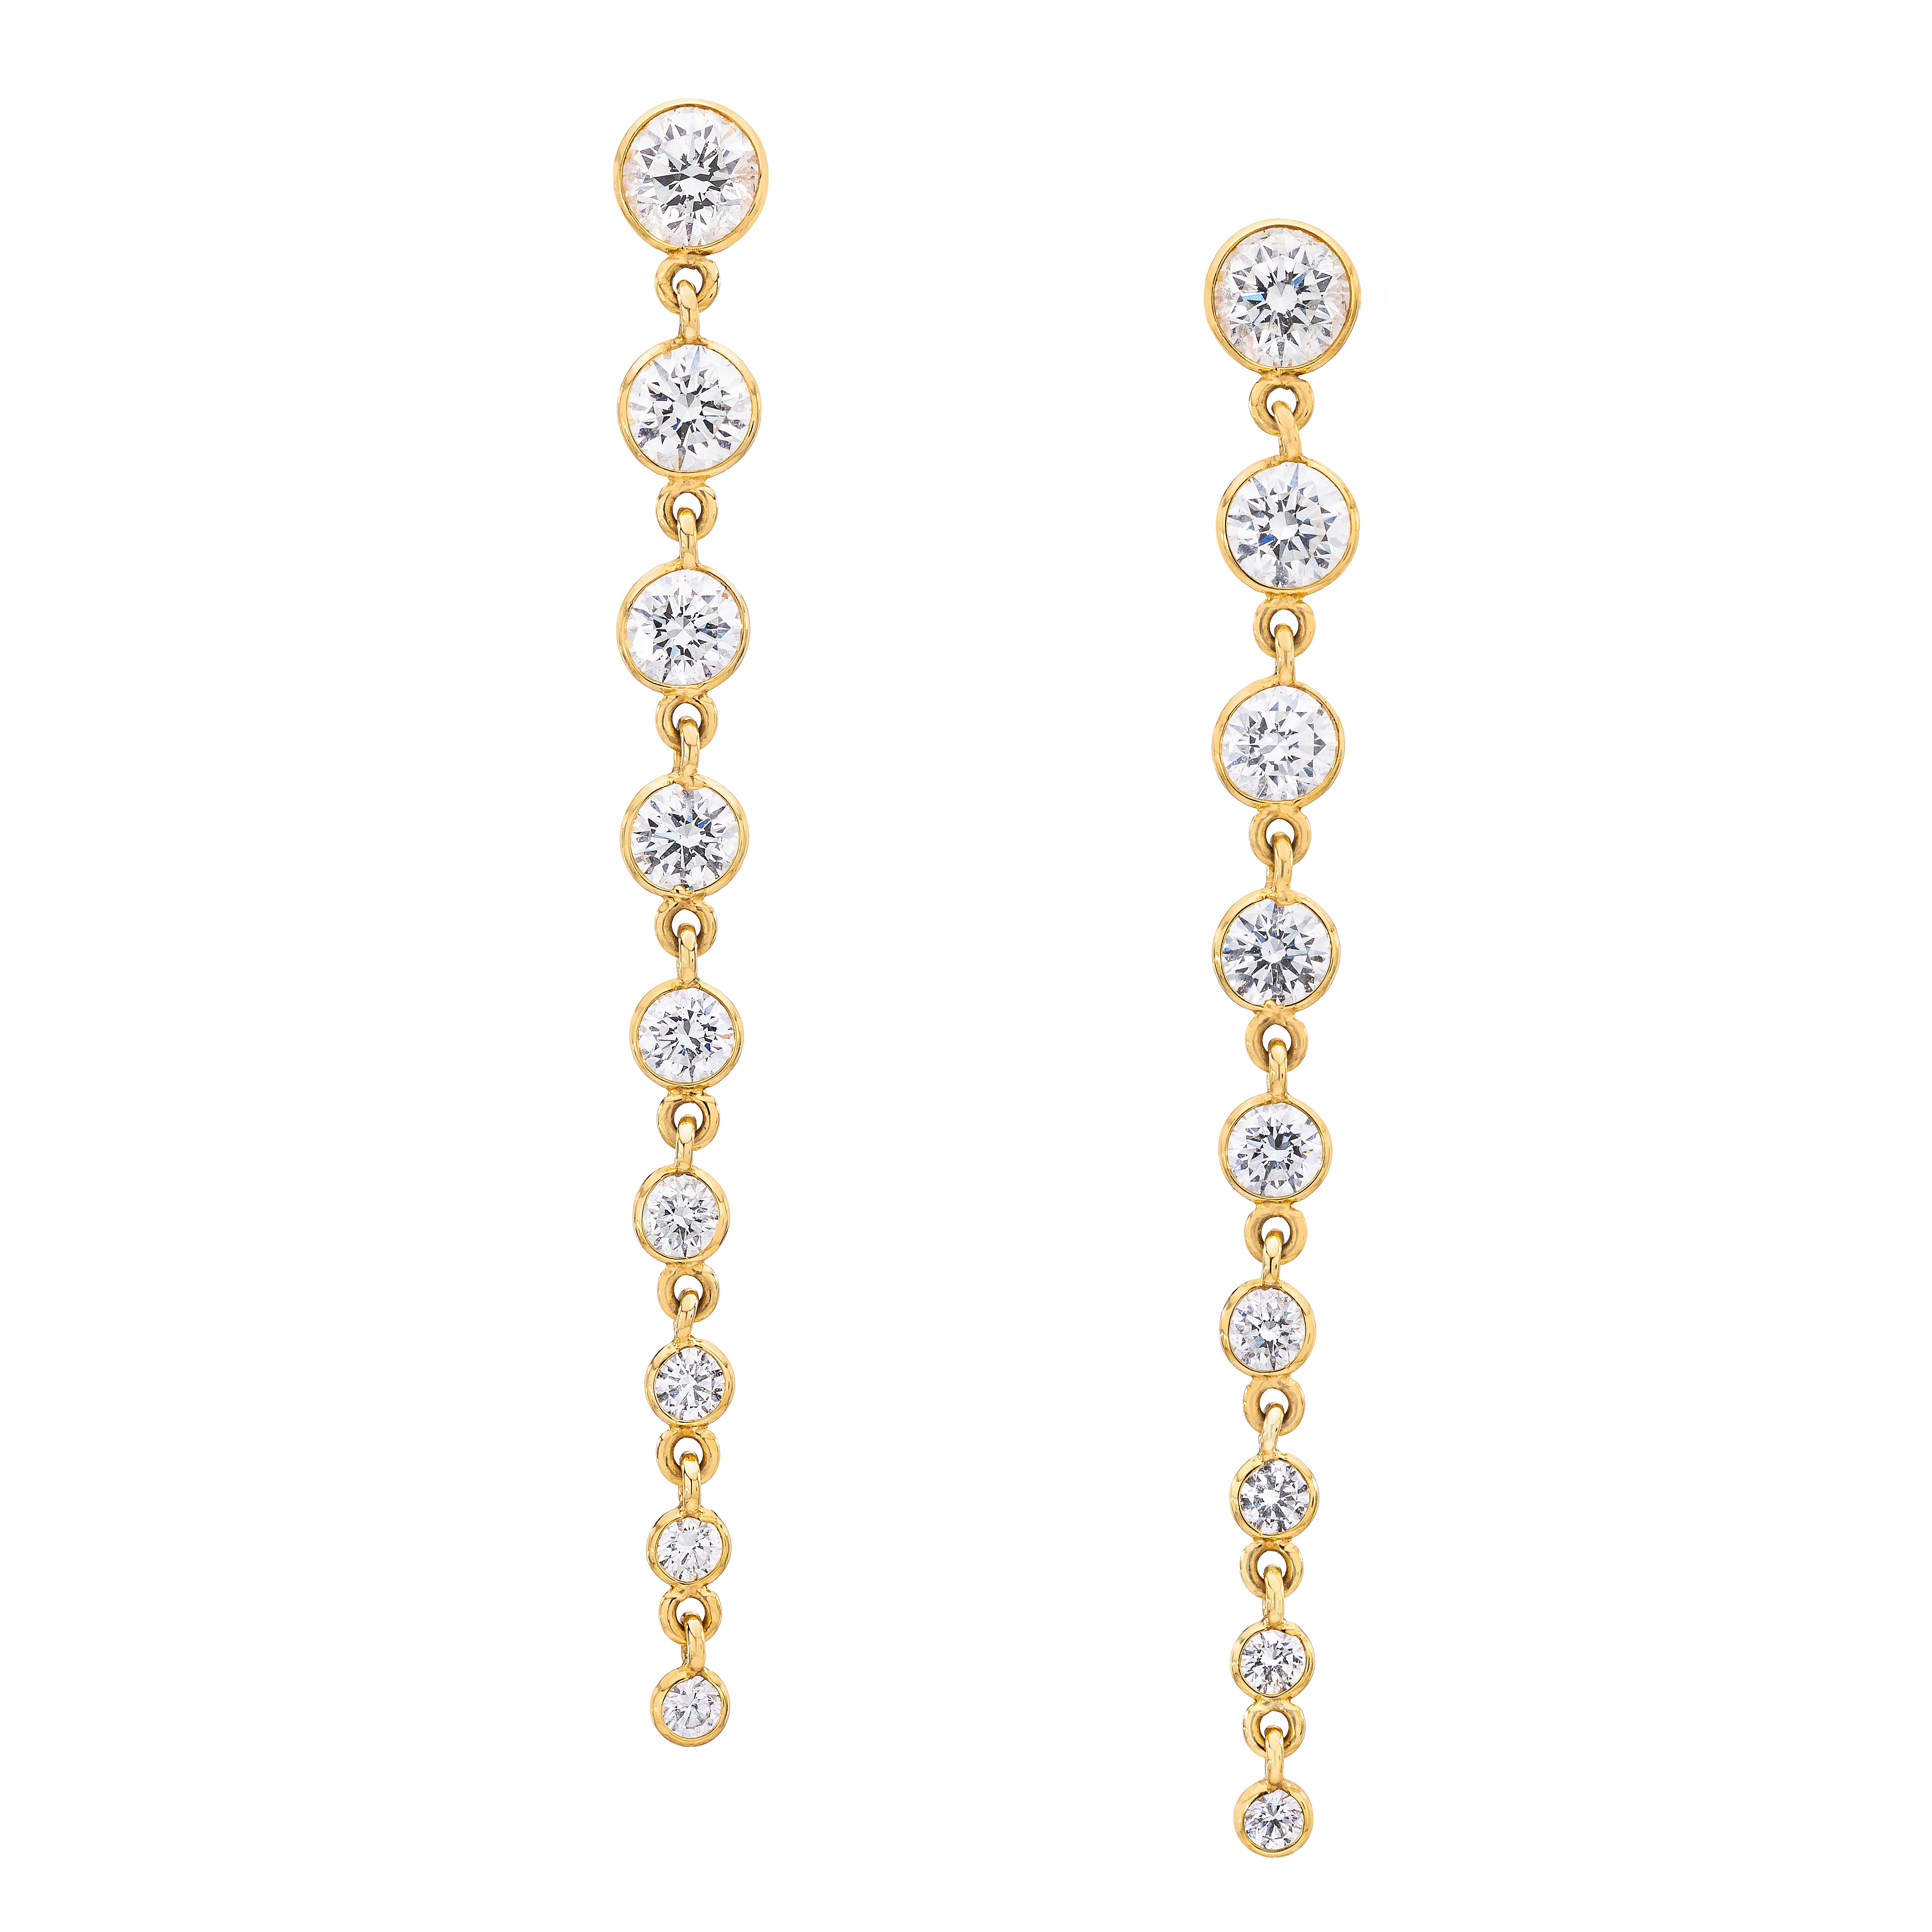 3.14 Carats Graduated Diamond Earrings in 18 Karat Yellow Gold